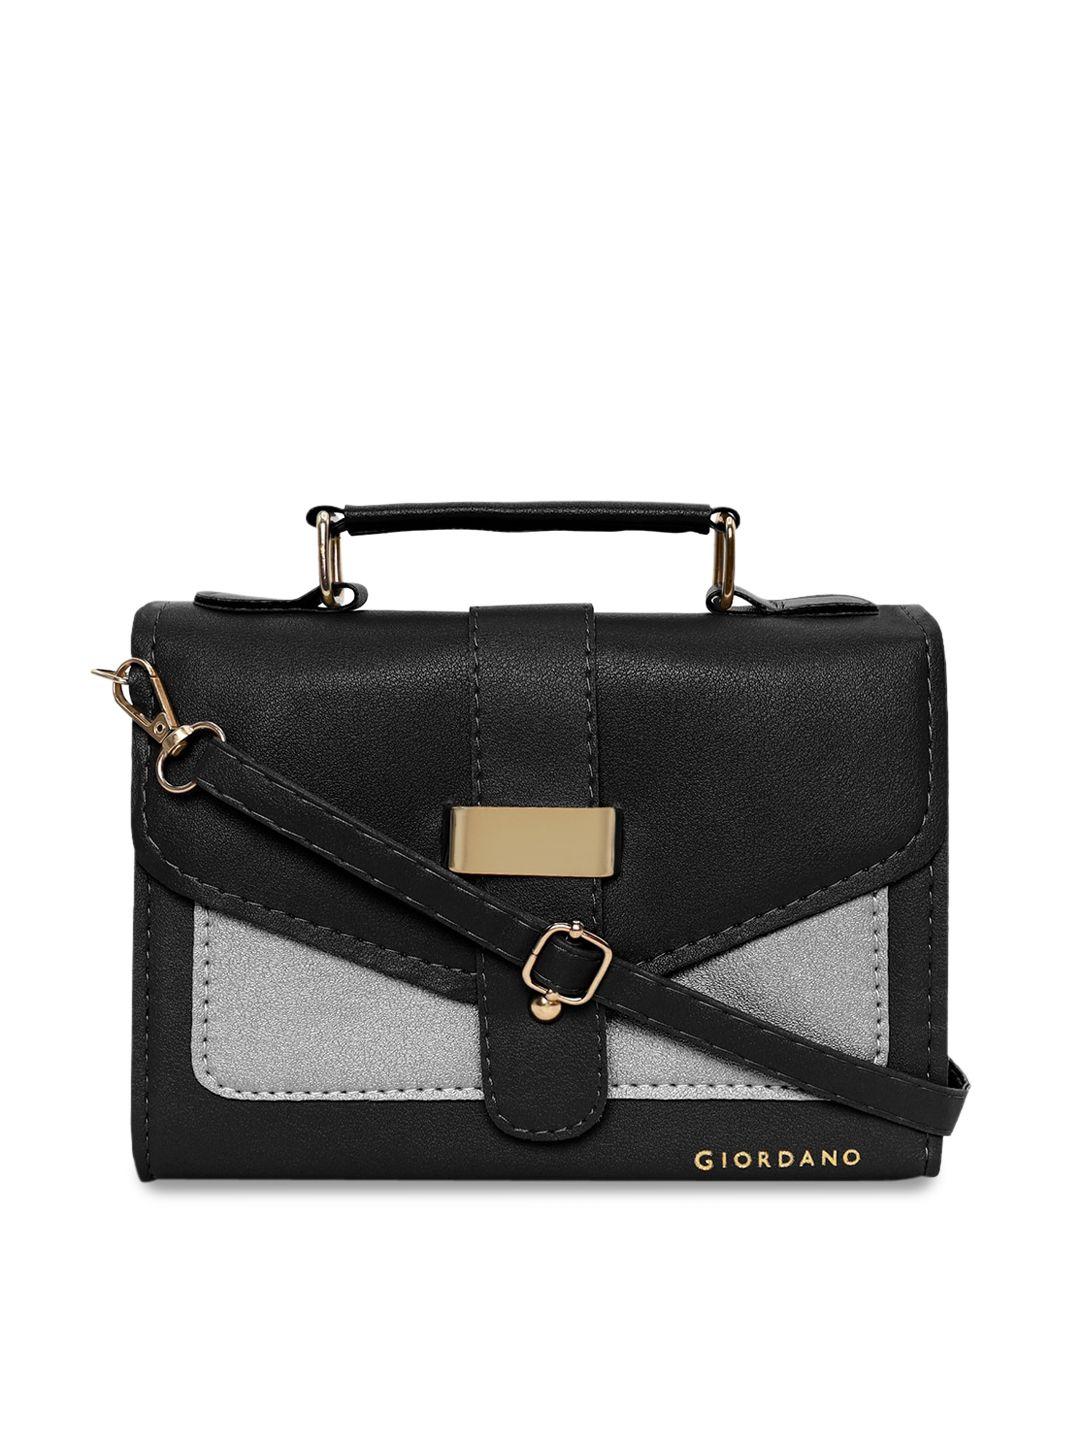 giordano black & grey colourblocked structured satchel